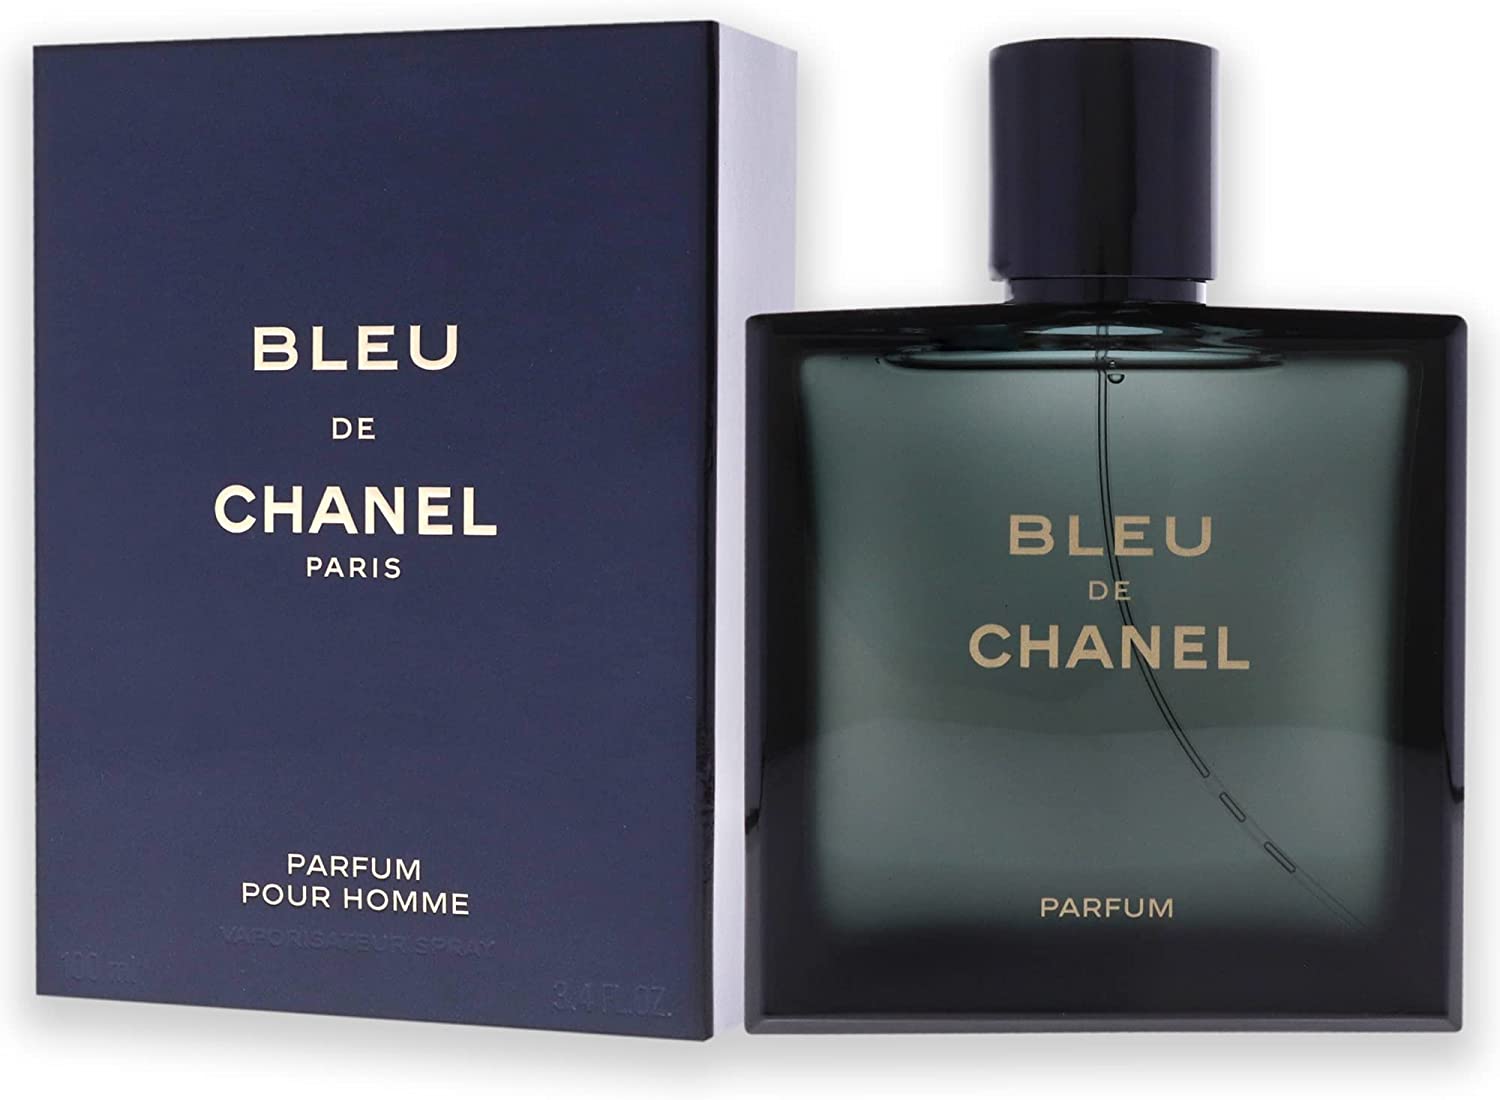 CHANEL BLEU DE CHANEL PARFUM 100 ML – THE LUSH LUXURY